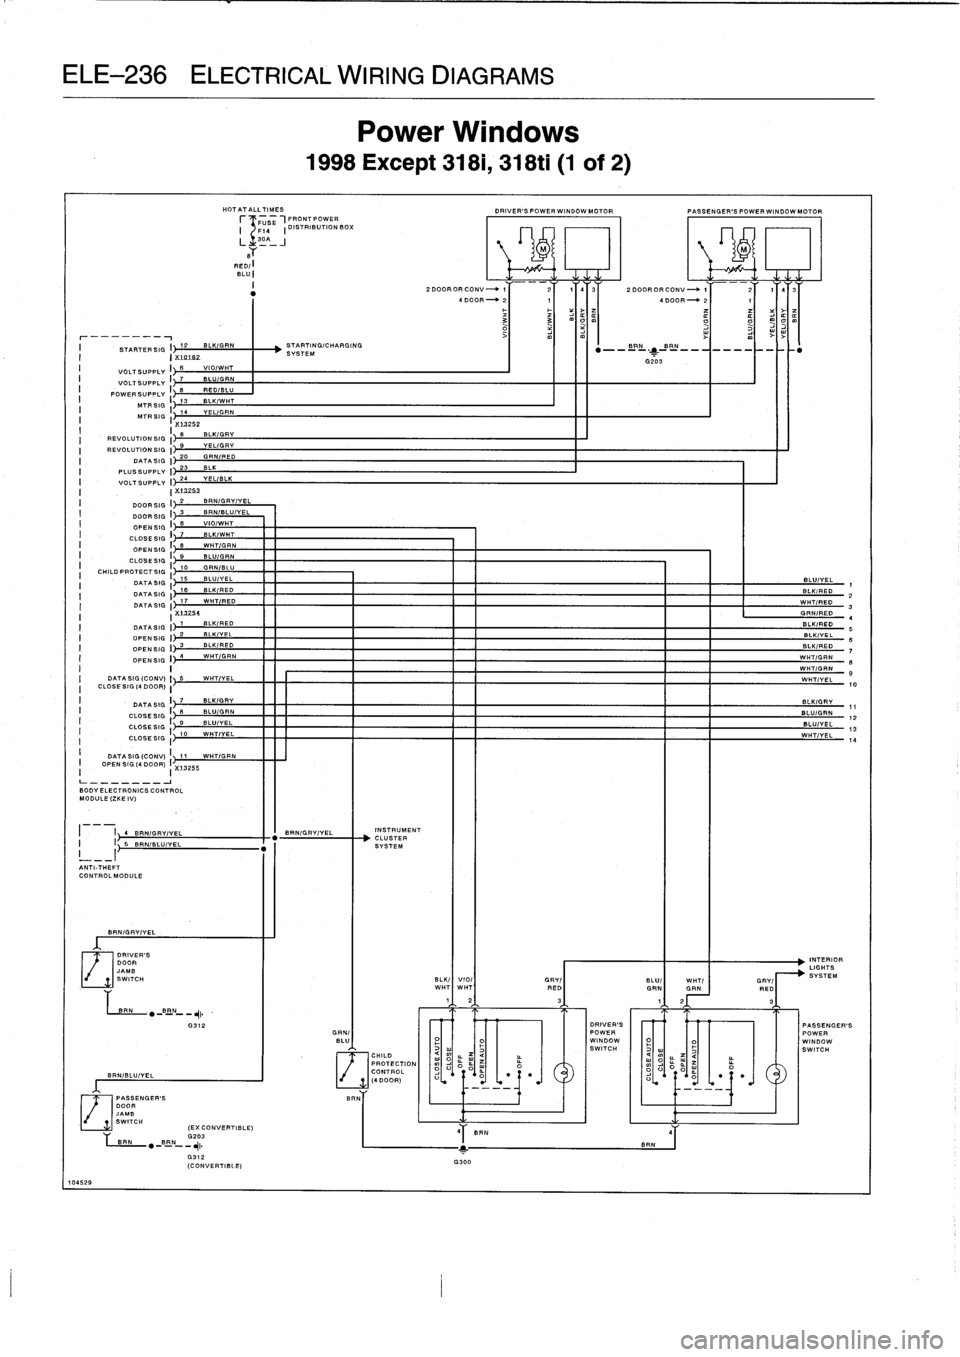 BMW 318i 1997 E36 Workshop Manual 
ELE-236
ELECTRICAL
WIRING
DIAGRAMS

HOTATALLTIMES
f
-
-T
USE
-1FRONTPOWER
F14

	

I
DISTRIBUTION
BOX

RED/
:
BLU
:

I

	

STARTERSIG
I
12

	

BLKIGRN

	

STARTING/CHARGING
I

	

I
X
10182

	

SYSTEM
